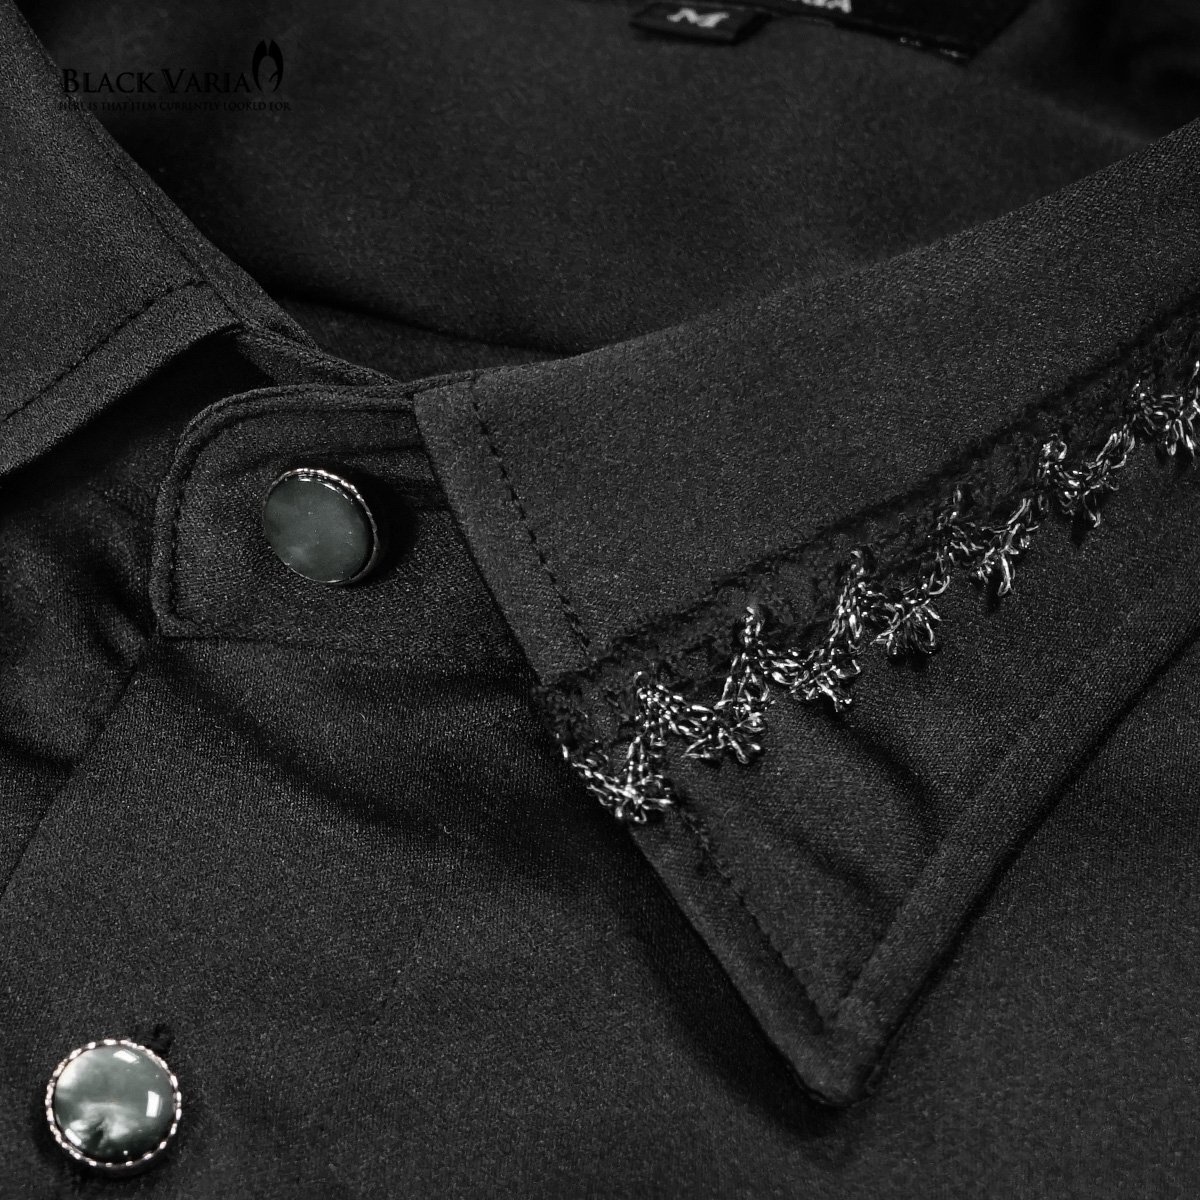 21170-2bk BlackVaria 襟レース ストーン風装飾ボタン ドレスシャツ パウダーサテン メンズ(ブラックレース黒シャツ) XL パーティー 上品_画像5